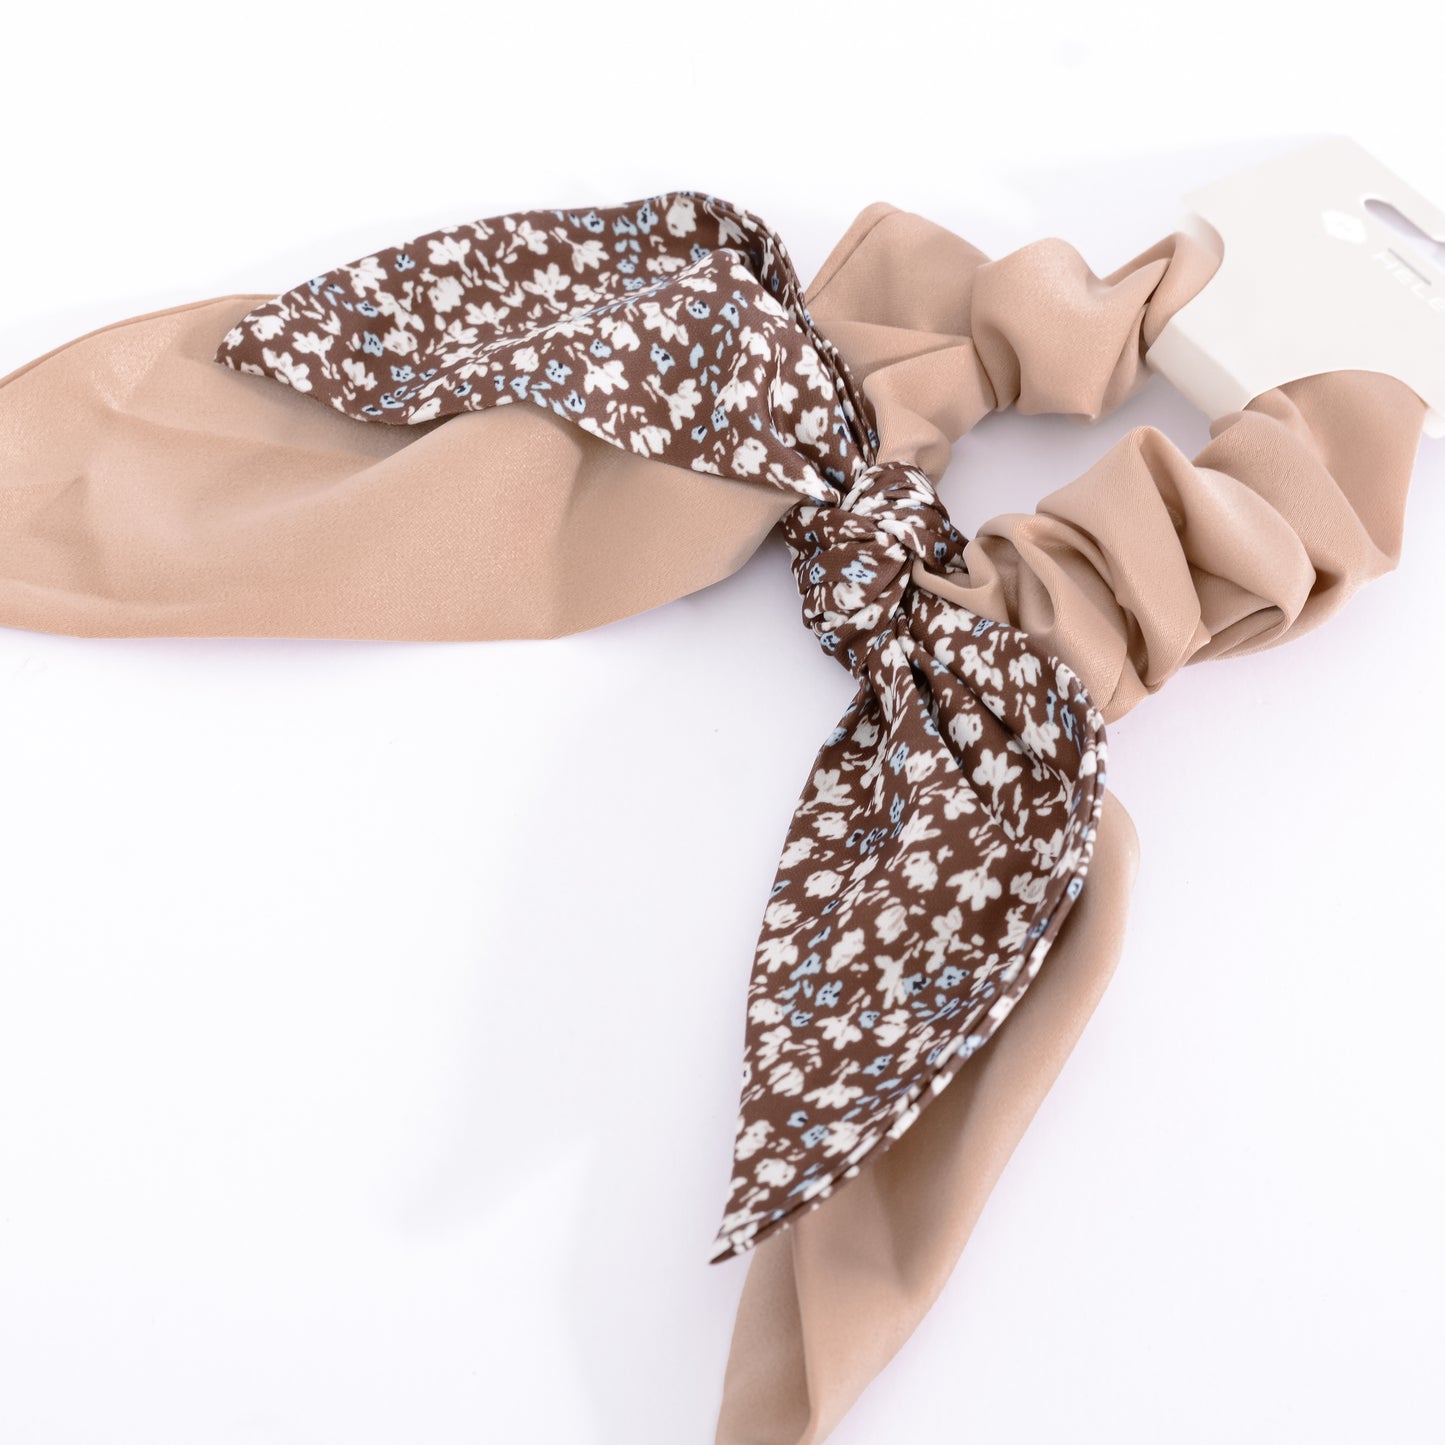 [Helen] Black / Brown Large Big Bow Floral Flower Ribbon Satin Scrunchie Elastic Hair Tie